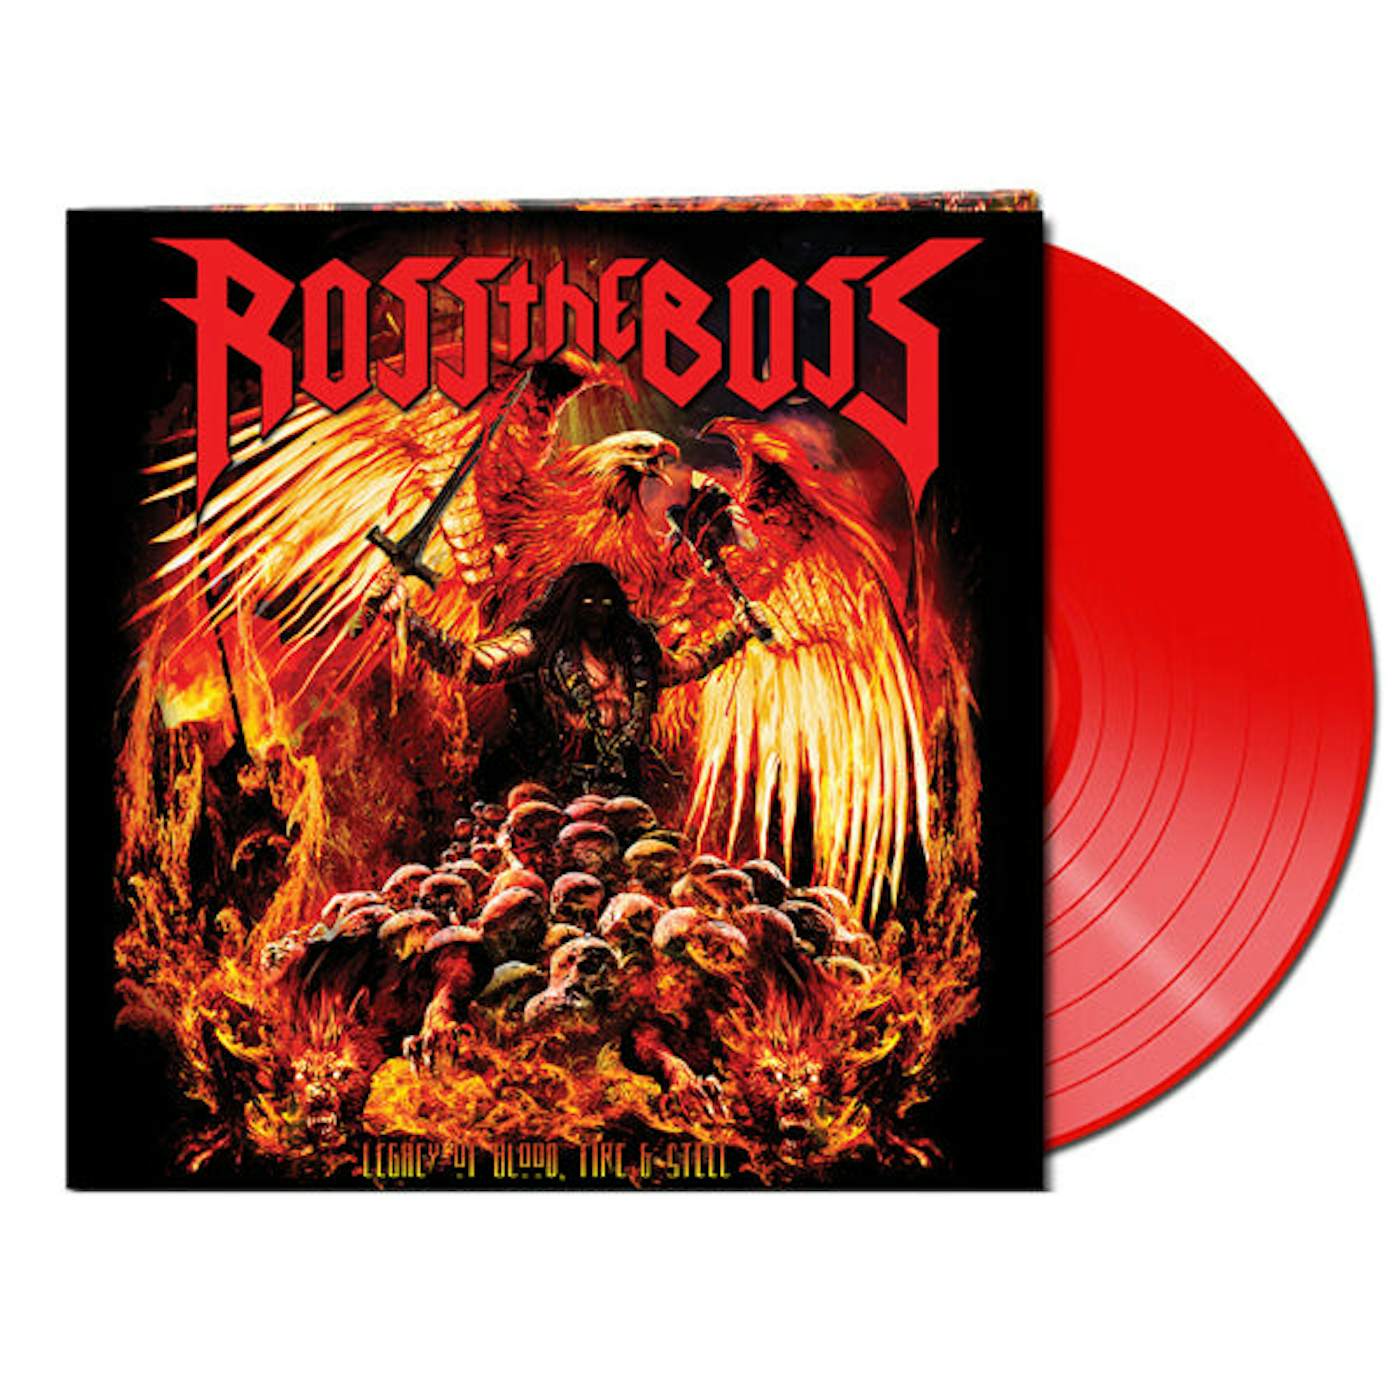 Ross The Boss LP - Legacy Of Blood, Fire & Steel (Red Vinyl)